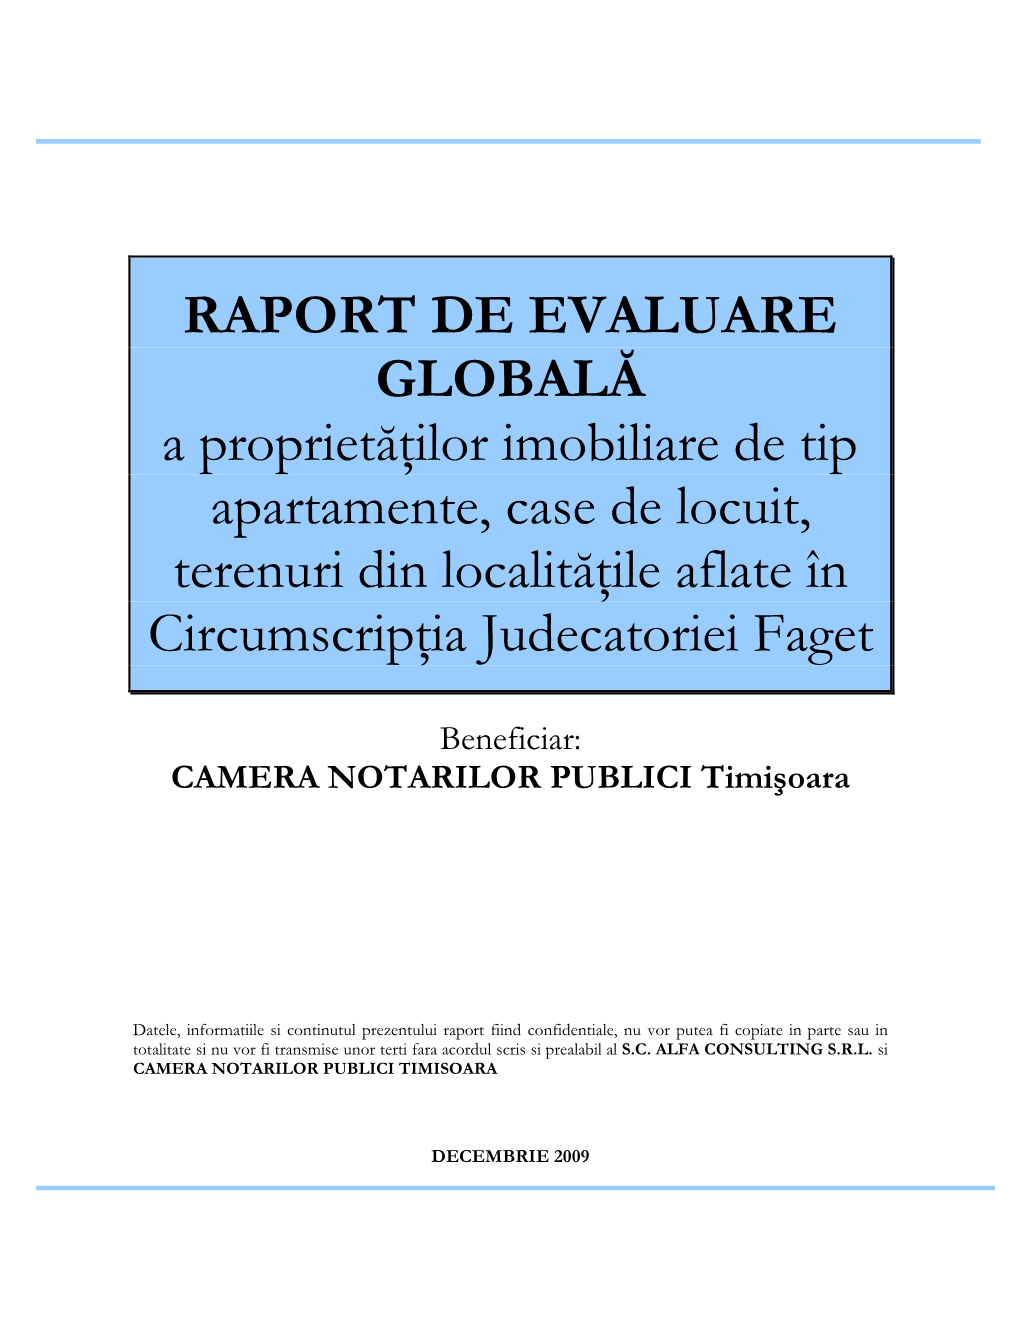 Raport Evaluare Globala Faget 2010